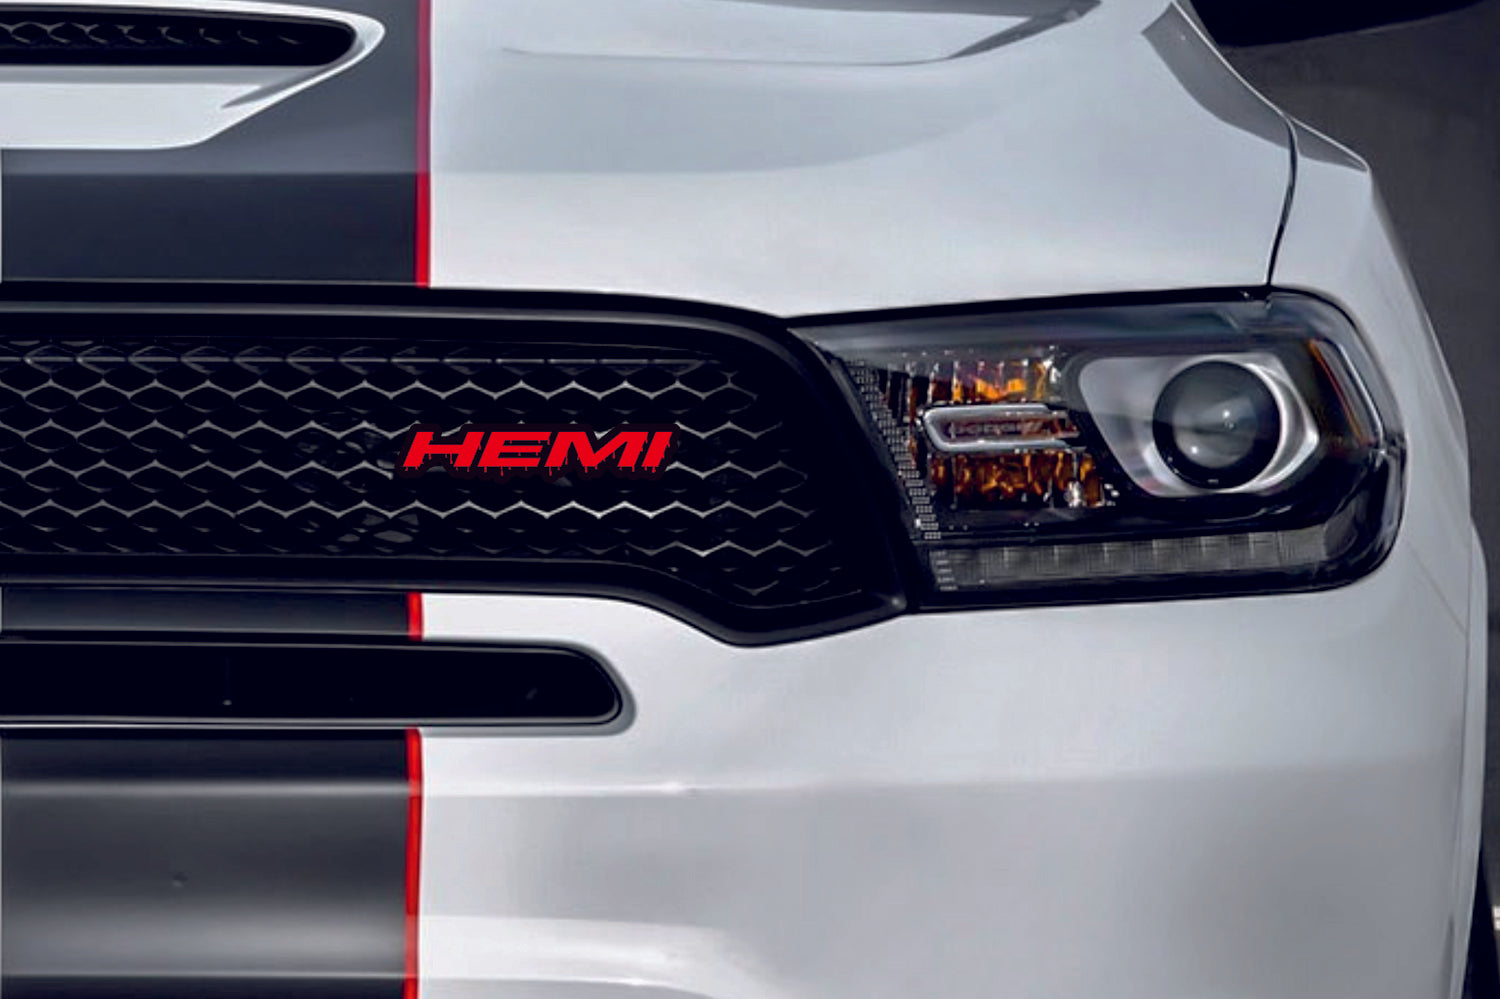 DODGE Radiator grille emblem with HEMI Blood logo - decoinfabric